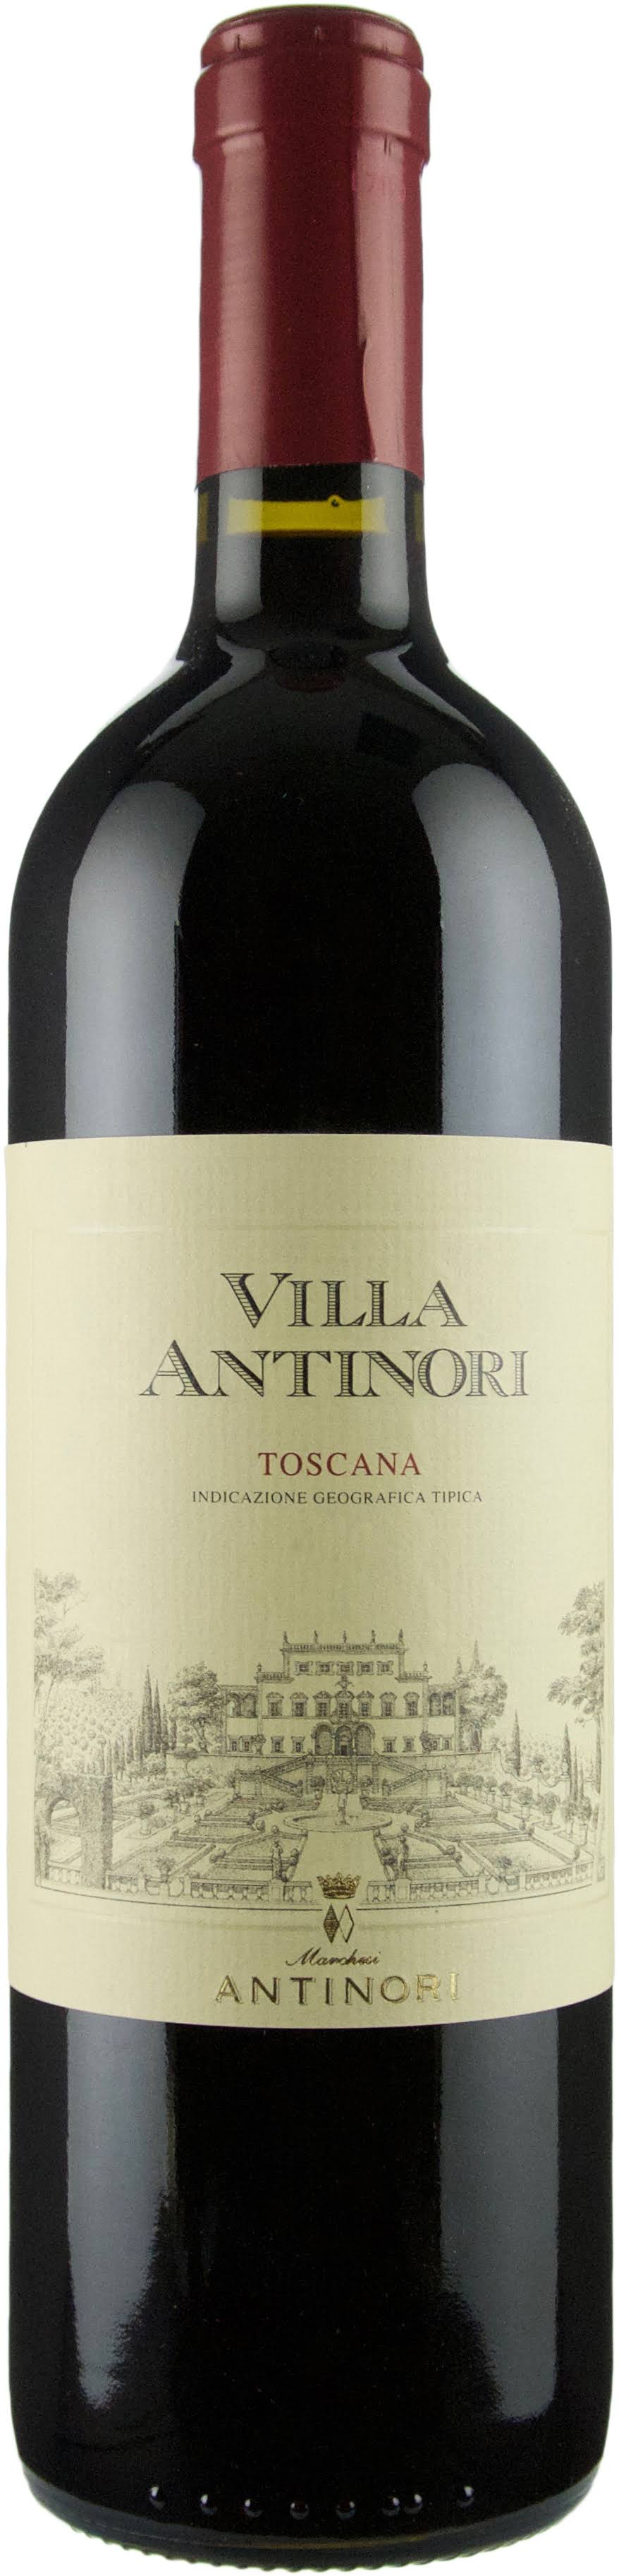 Antinori Villa Antinori Toscana Red Wine